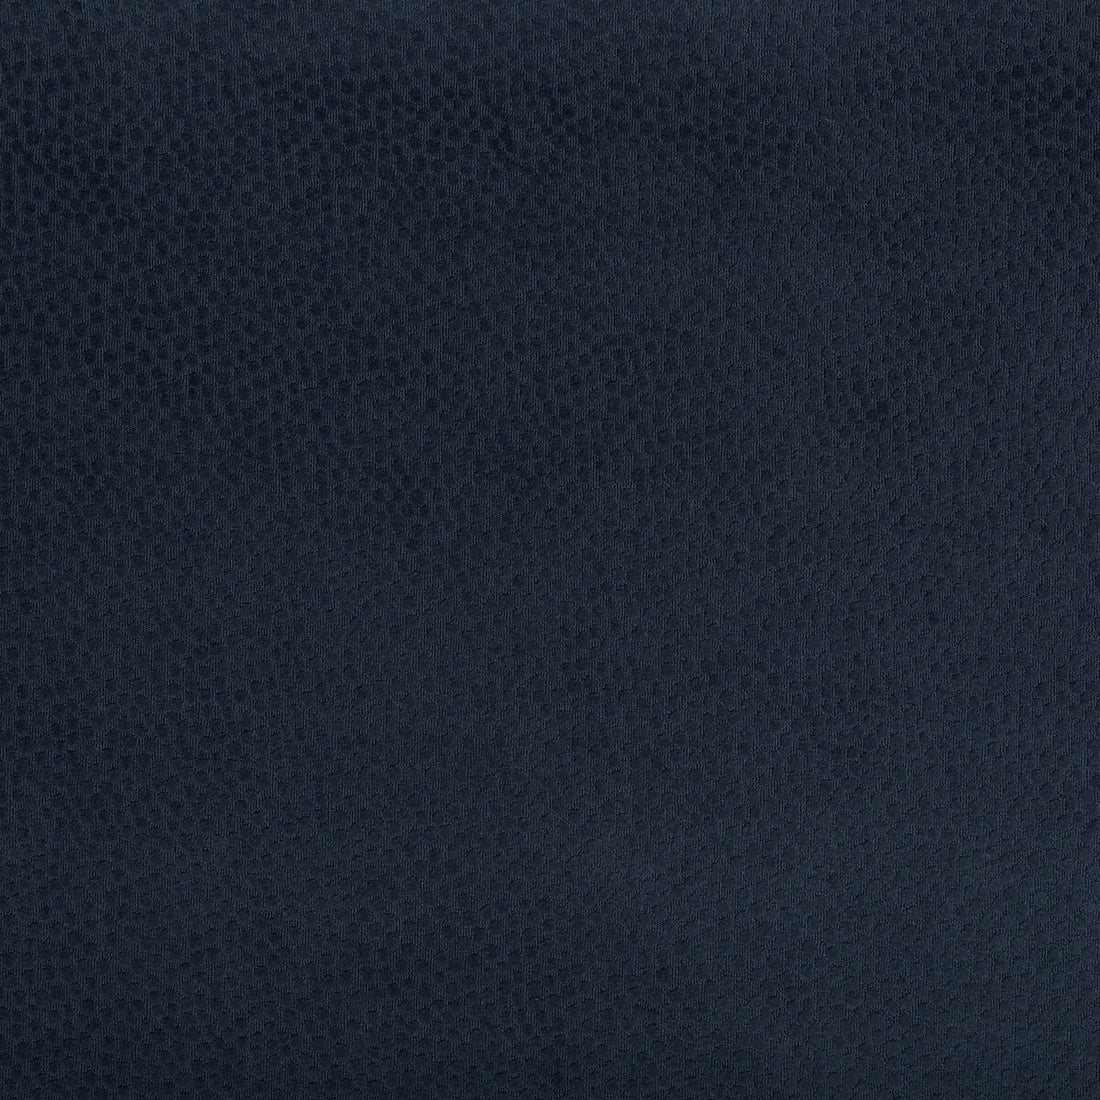 Kravet Smart fabric in 34317-50 color - pattern 34317.50.0 - by Kravet Smart